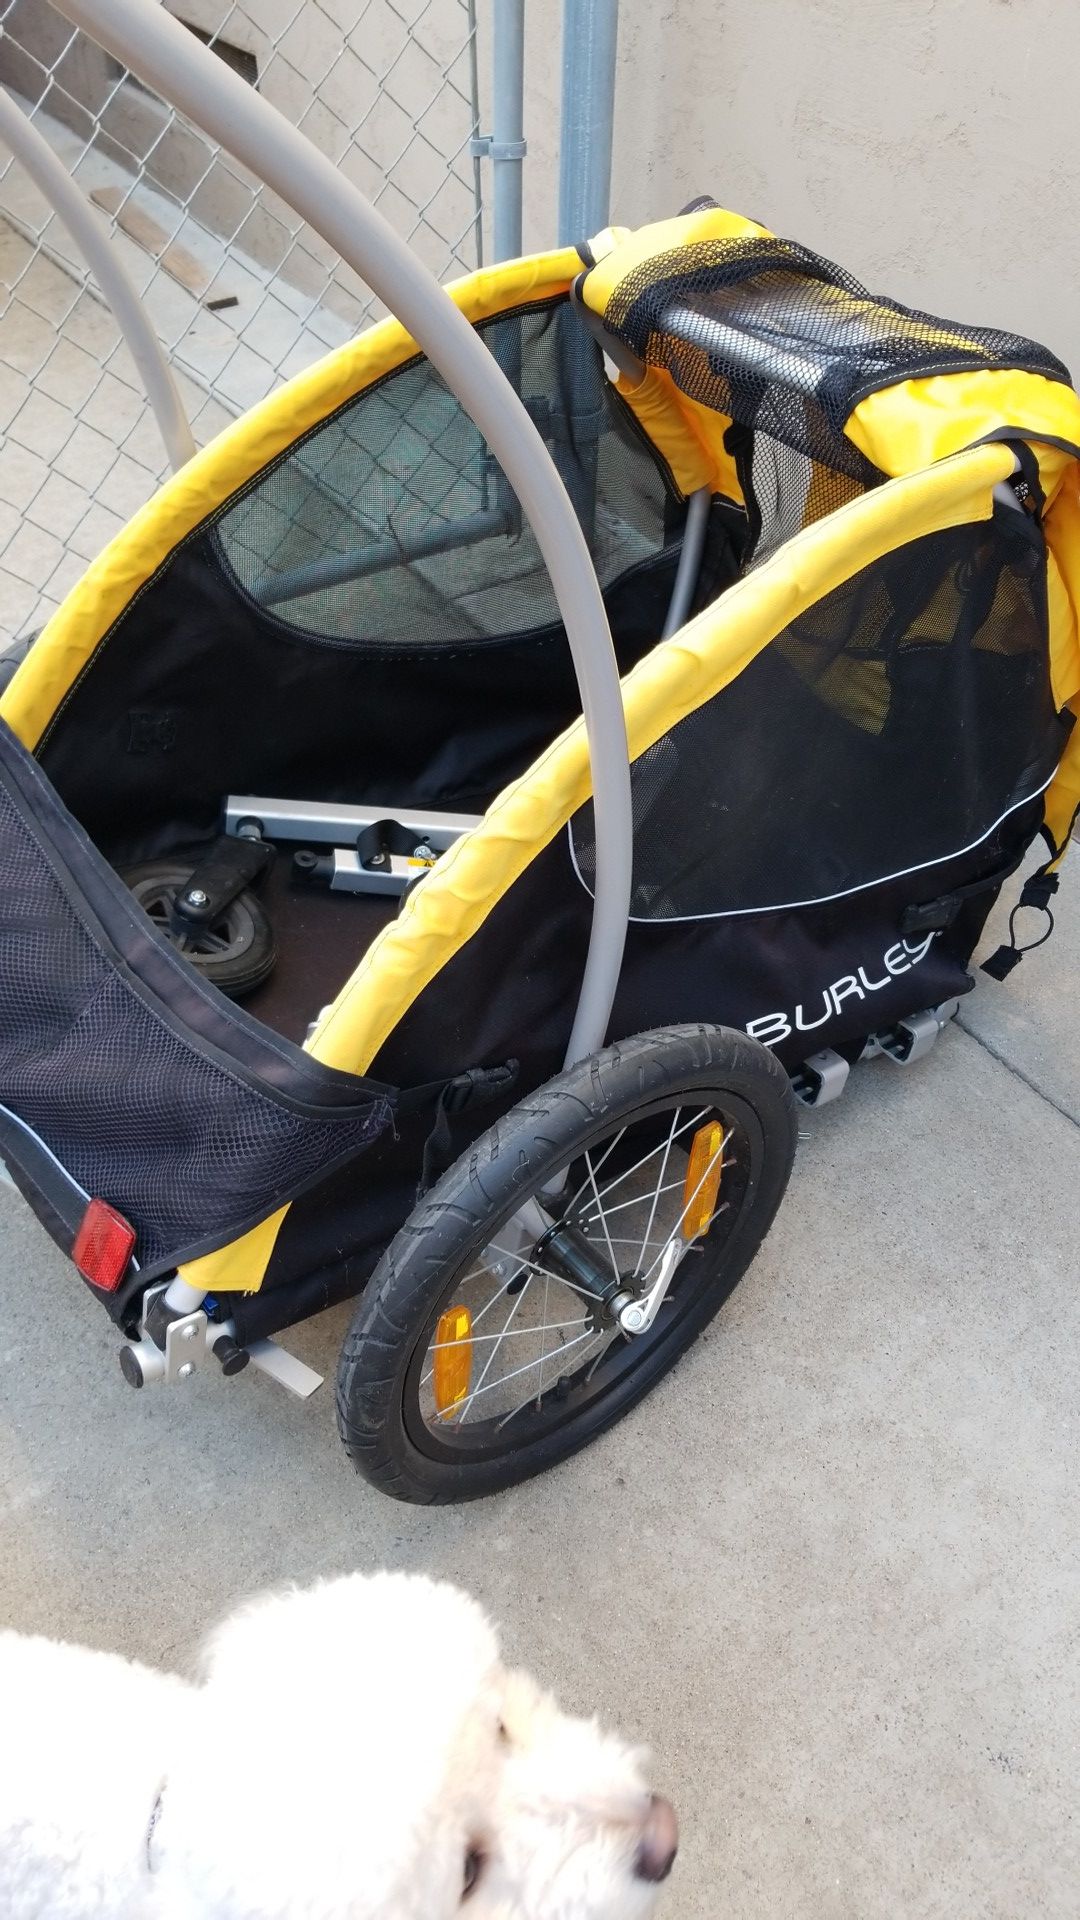 PRICE LOWERED Burley dog stroller/bike attachment